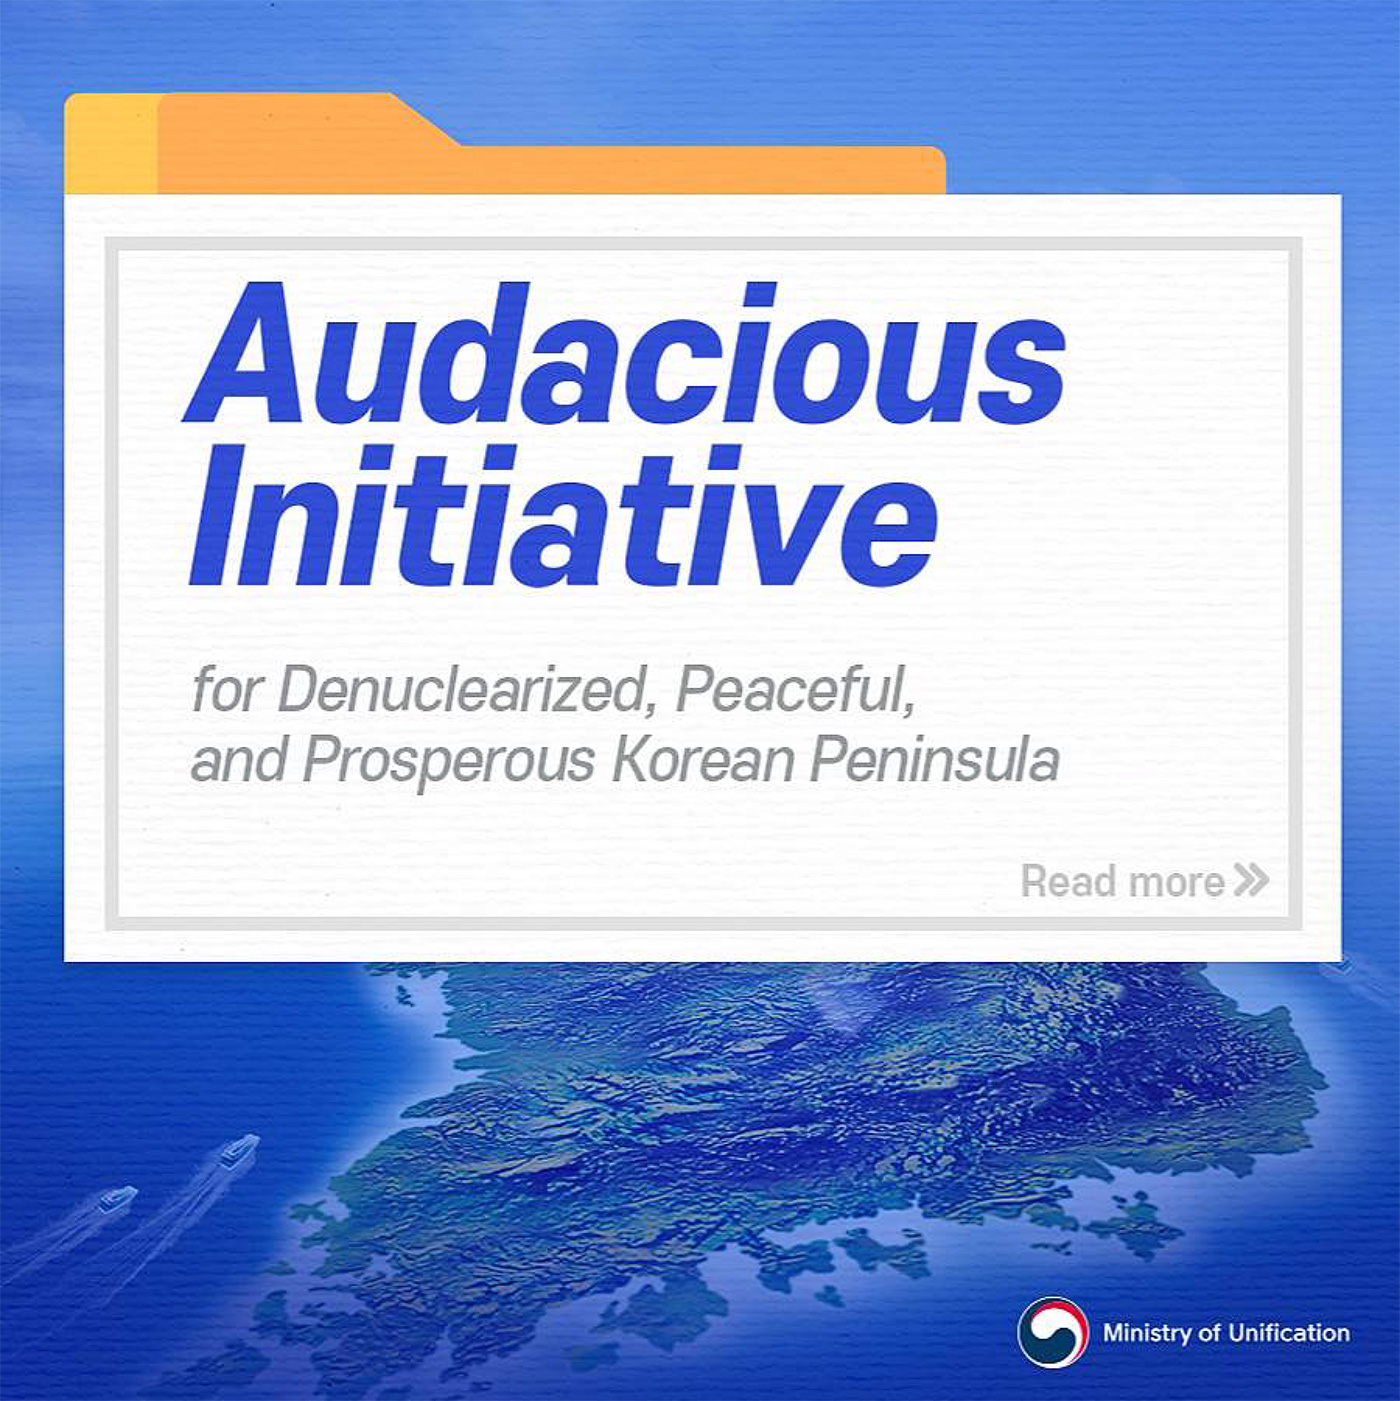 Audacious Initiative for Denuclearized, Peaceful, and Prosperous Korean Peninsula01